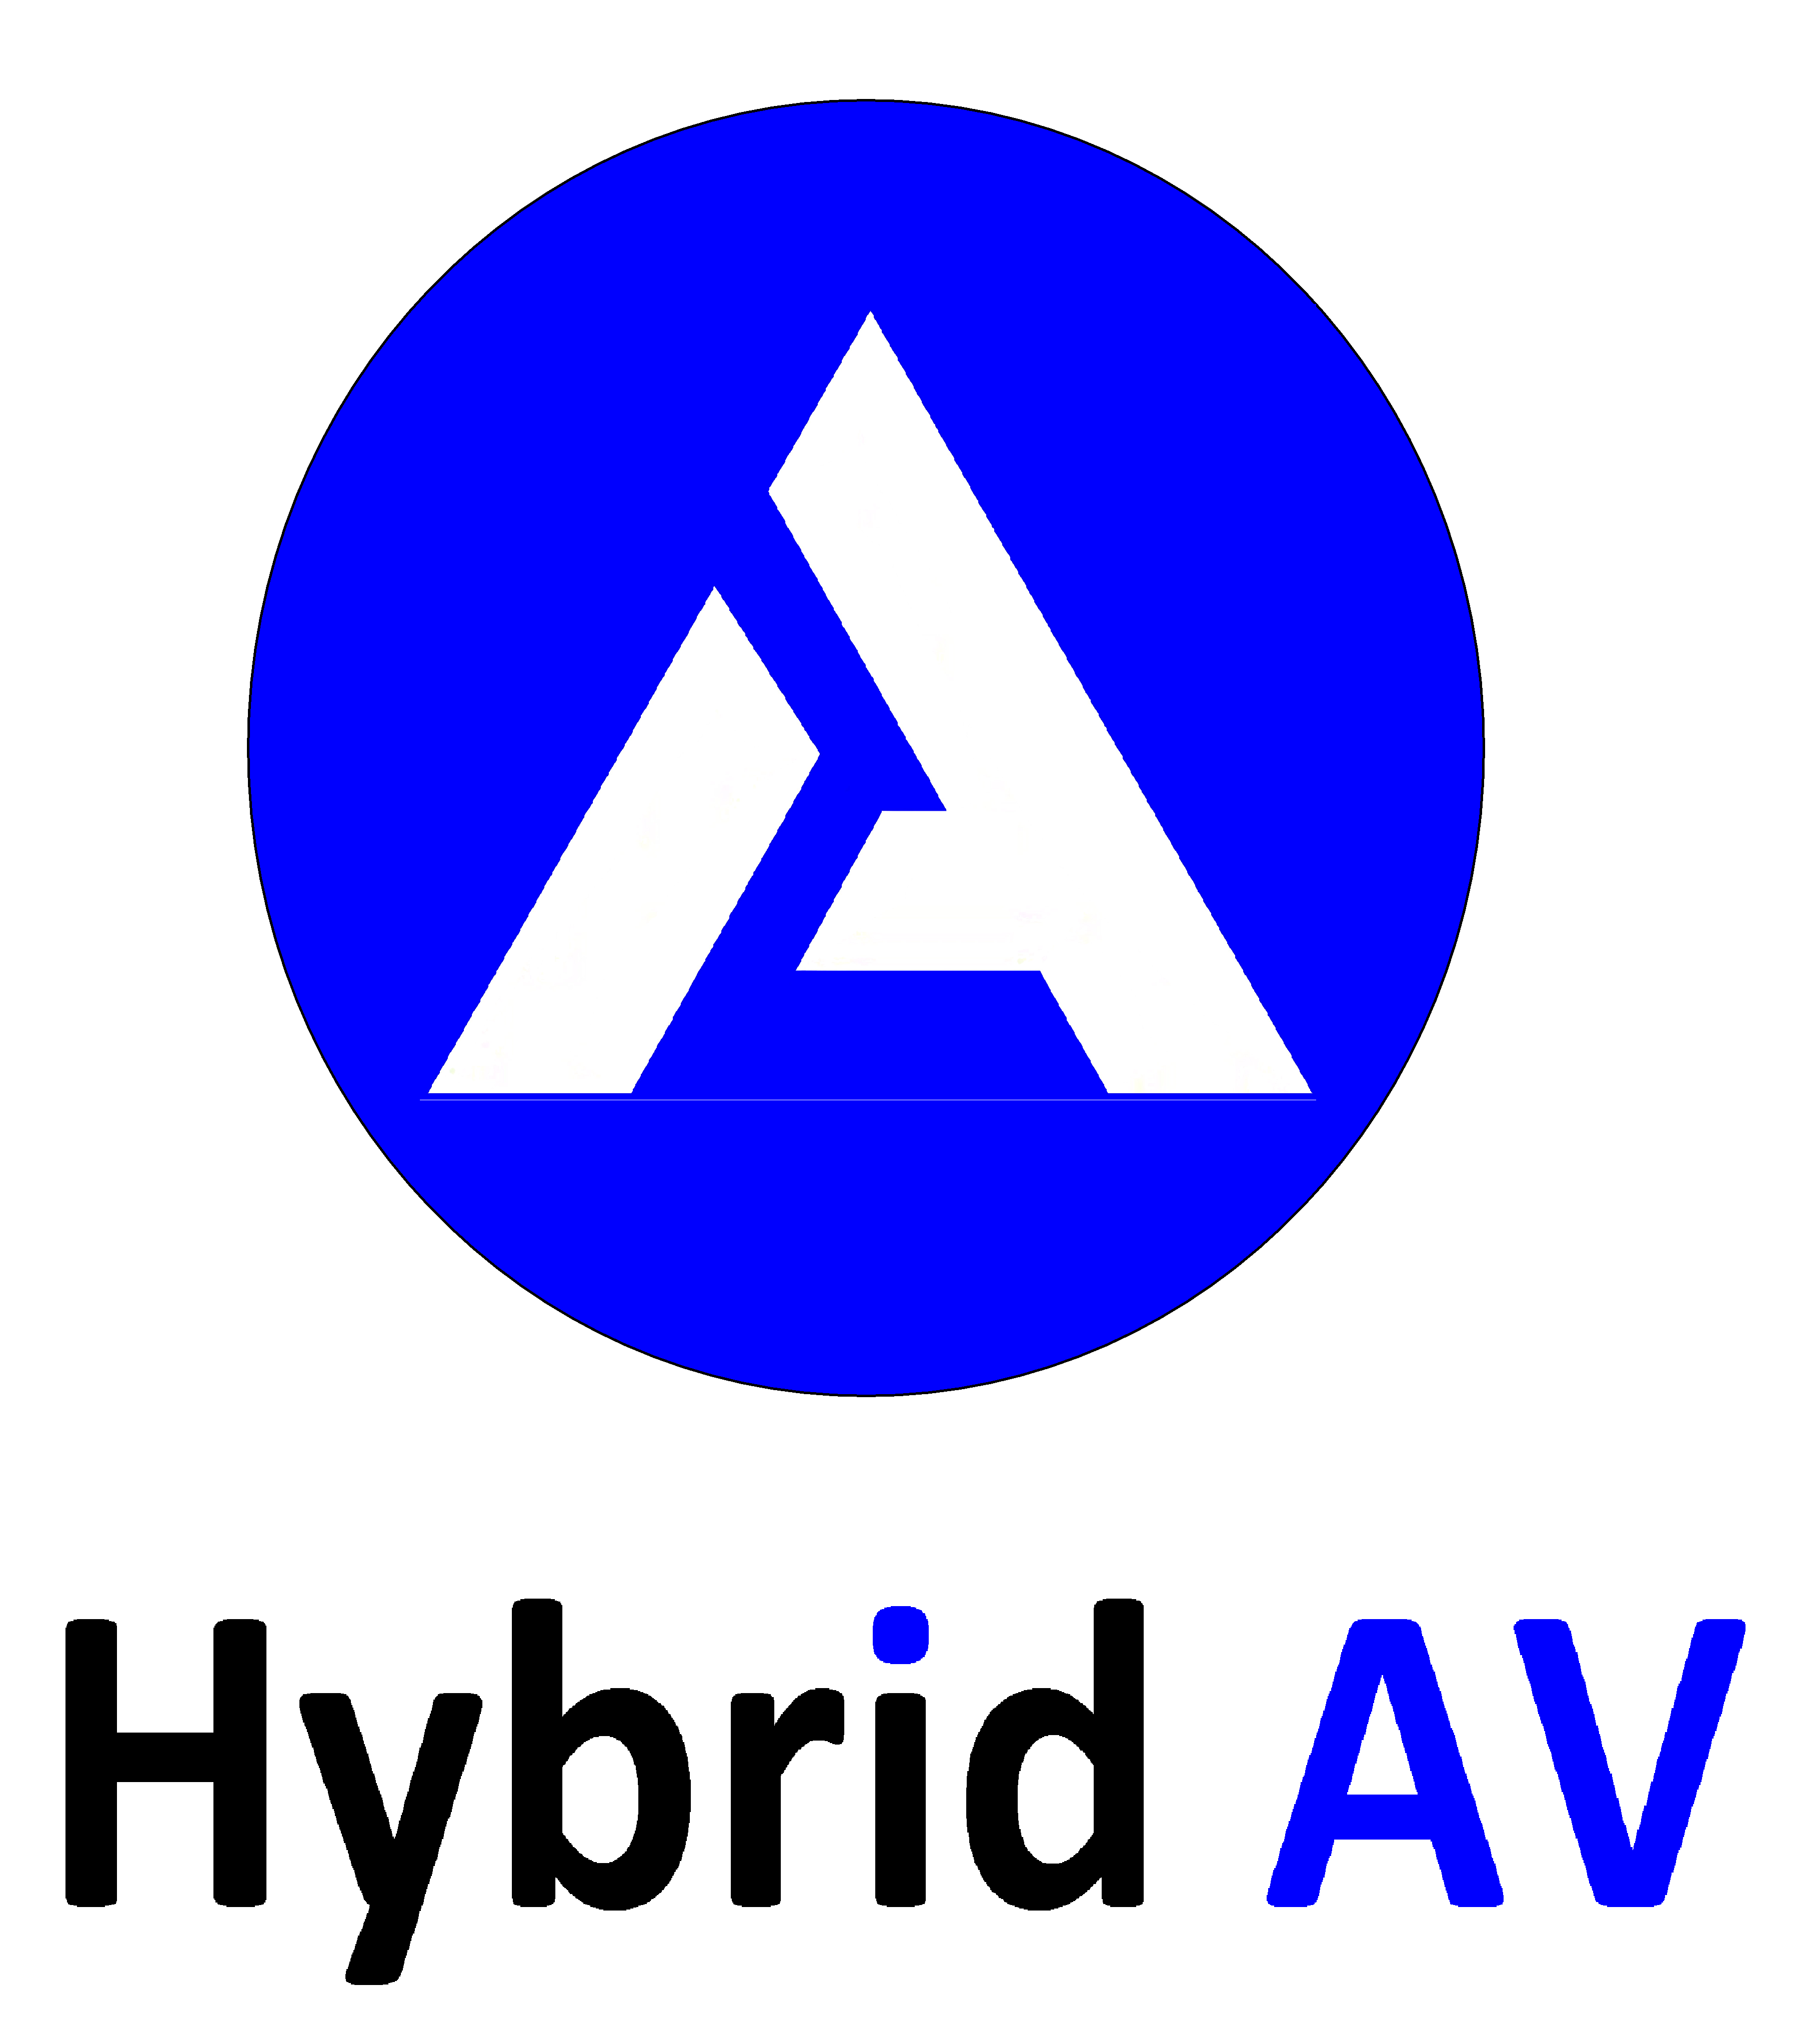 Av letter logo design with simple style Royalty Free Vector